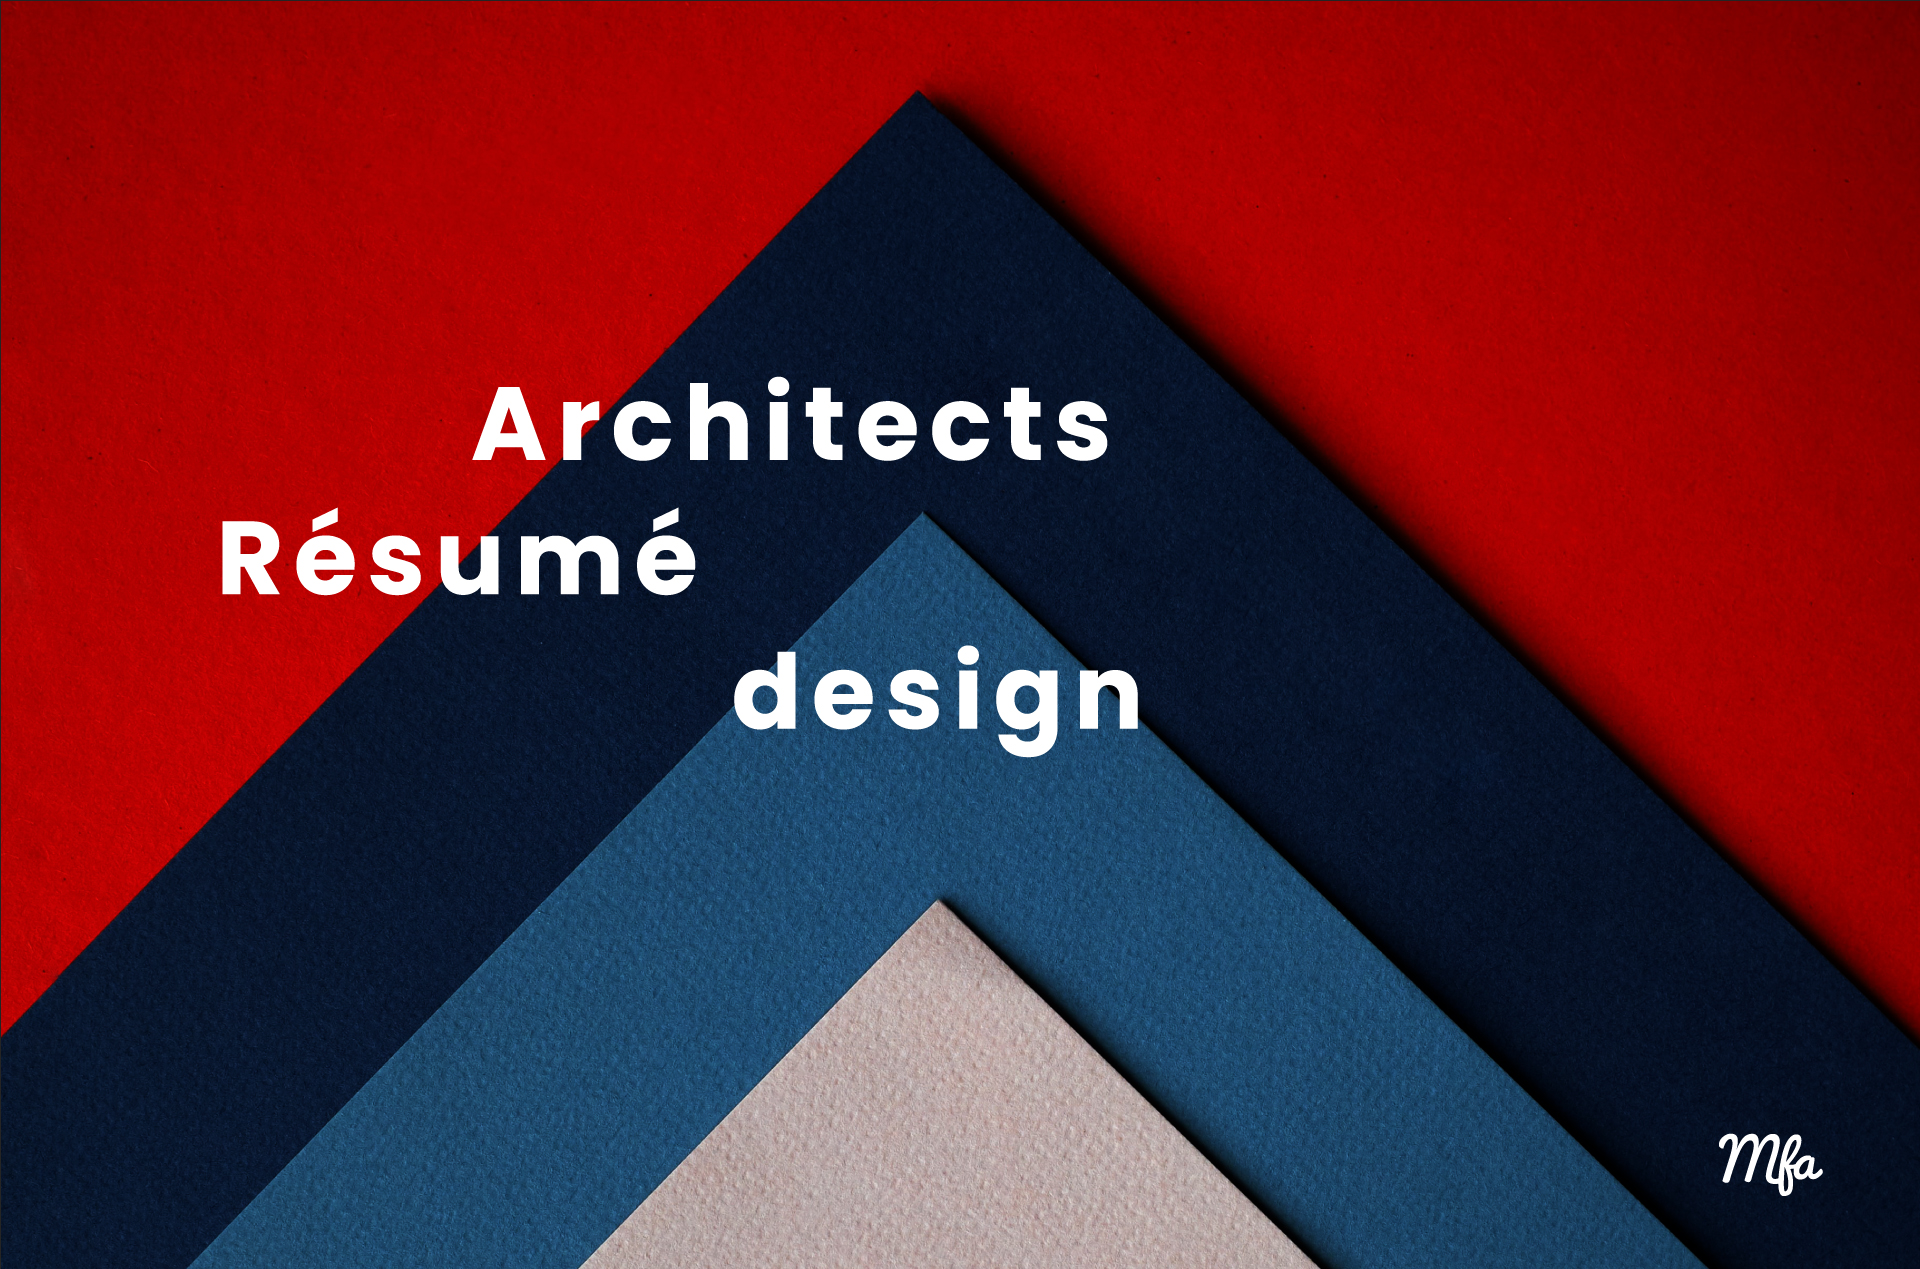 Architects resume design